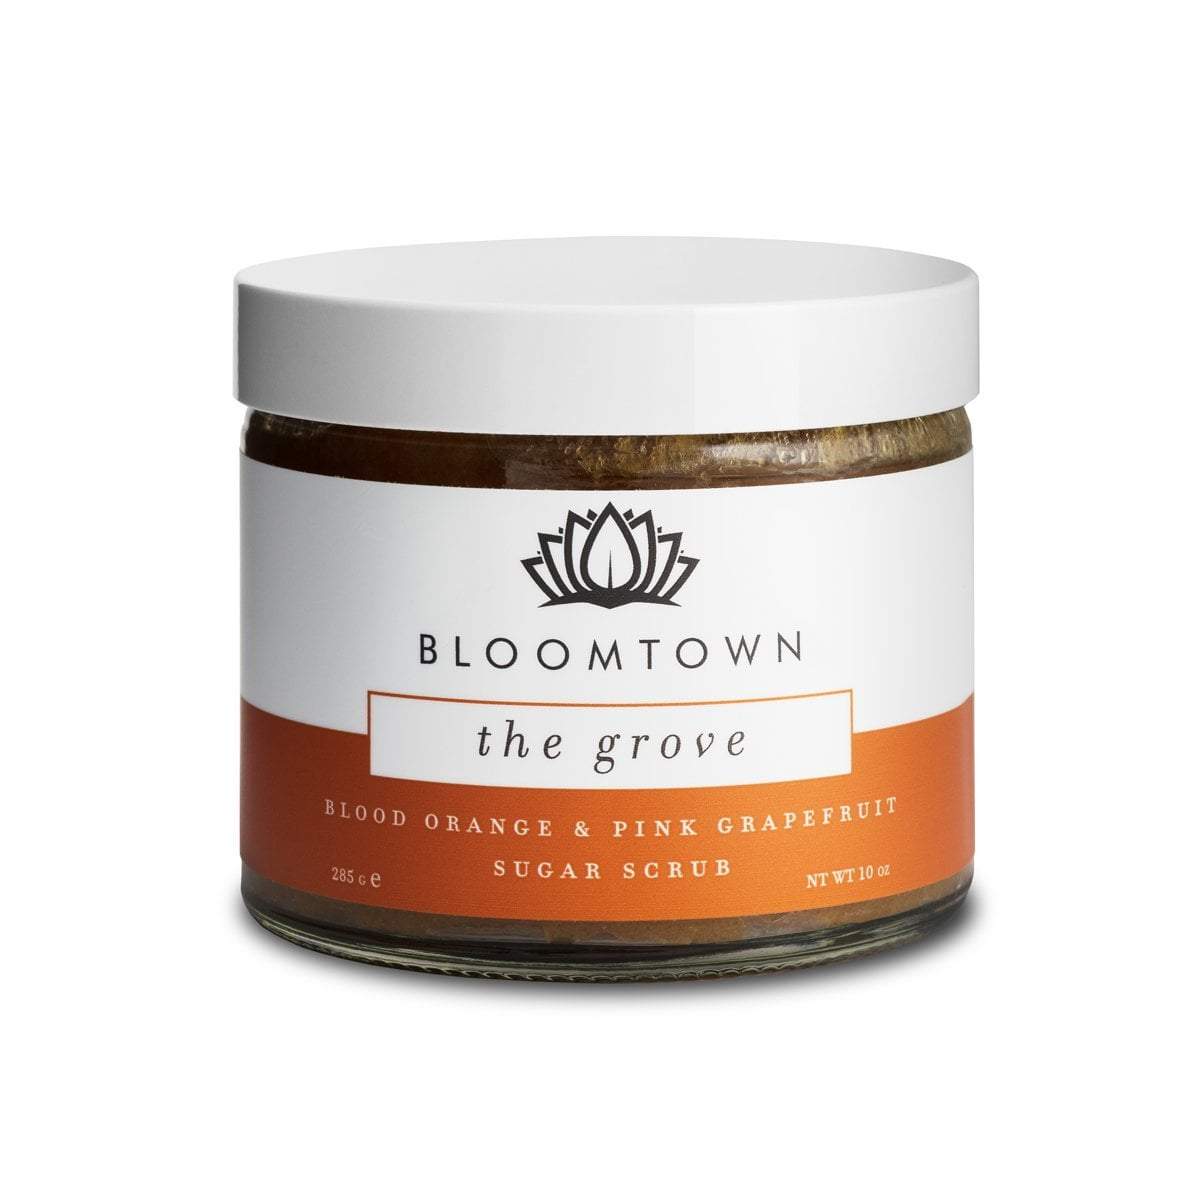 Bloomtown Sugar Scrub: The Grove (Blood Orange & Pink Grapefruit)